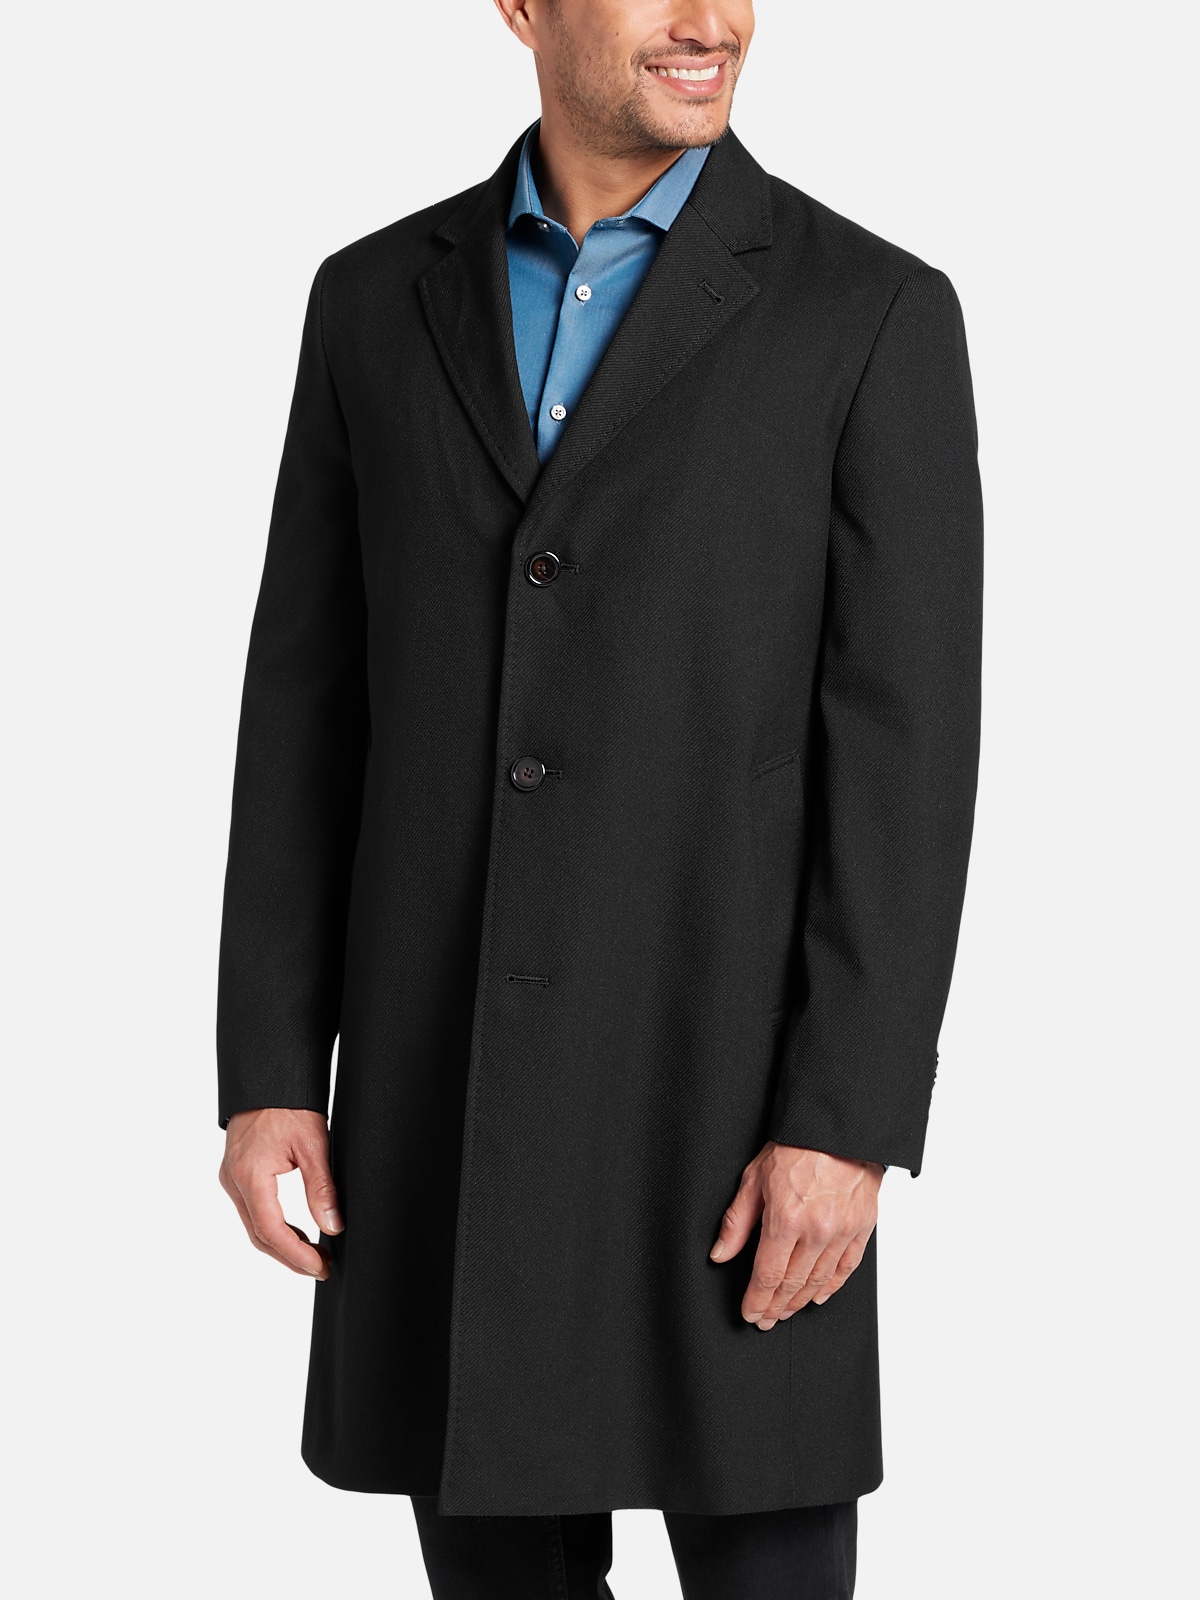 Men's Topcoats - Custom Outerwear